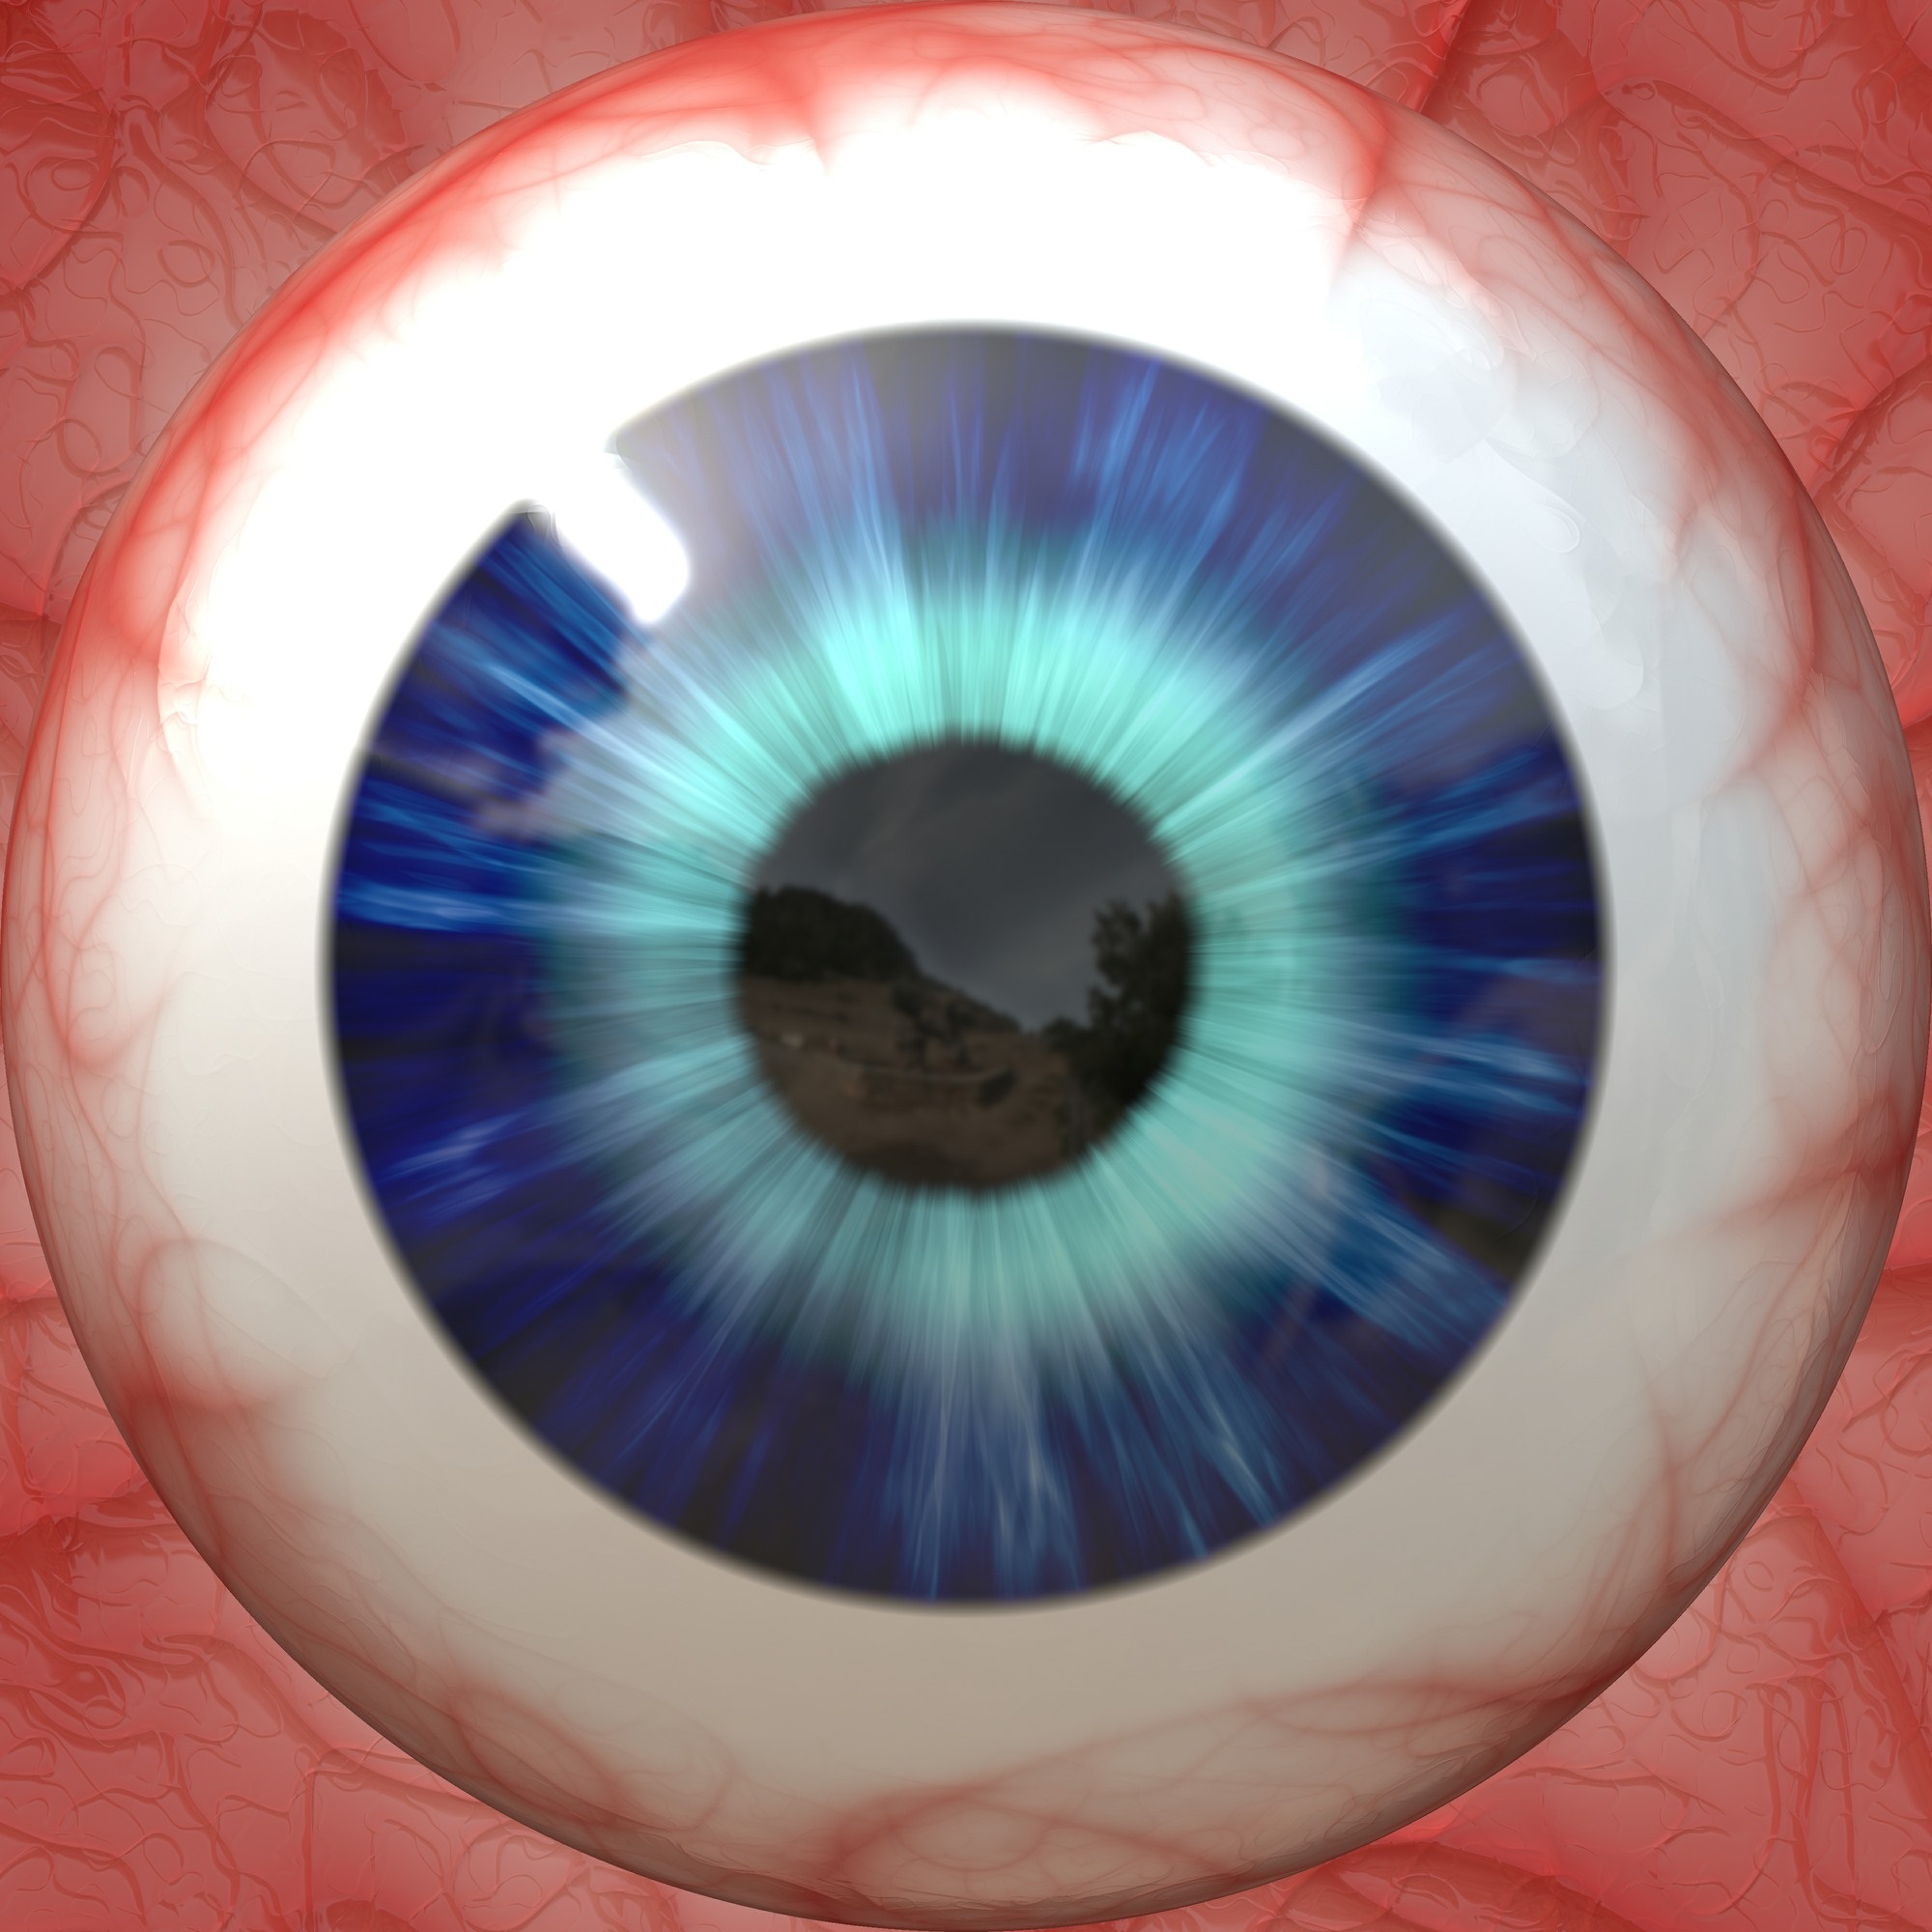 Anatomy eyeball sight drawing free image download